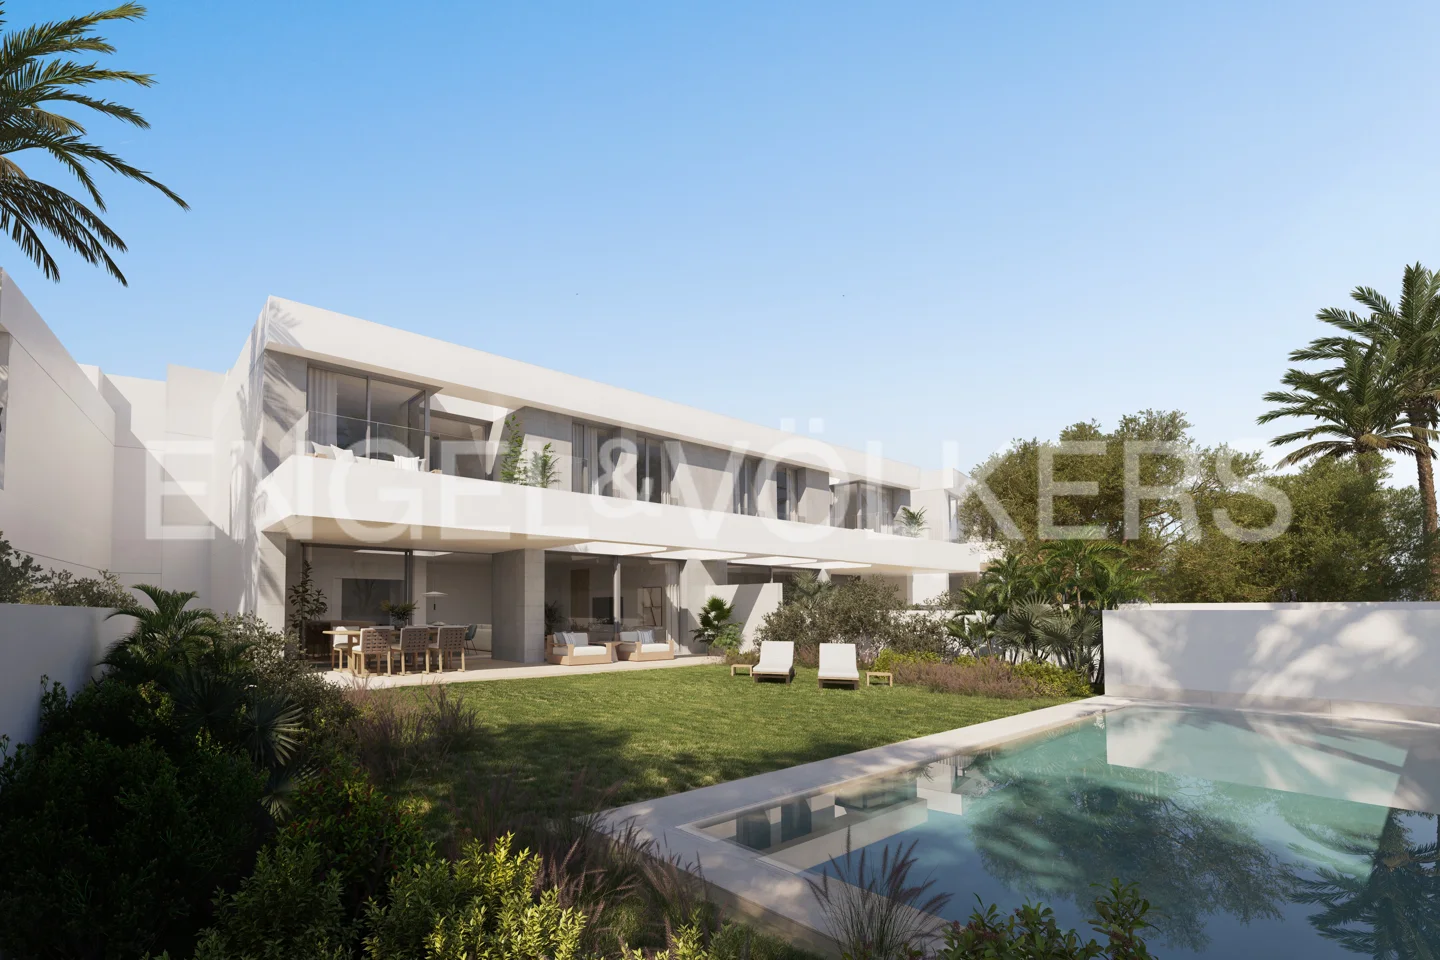 Stunning luxury villas in the heart of the city of Las Palmas de G.C.